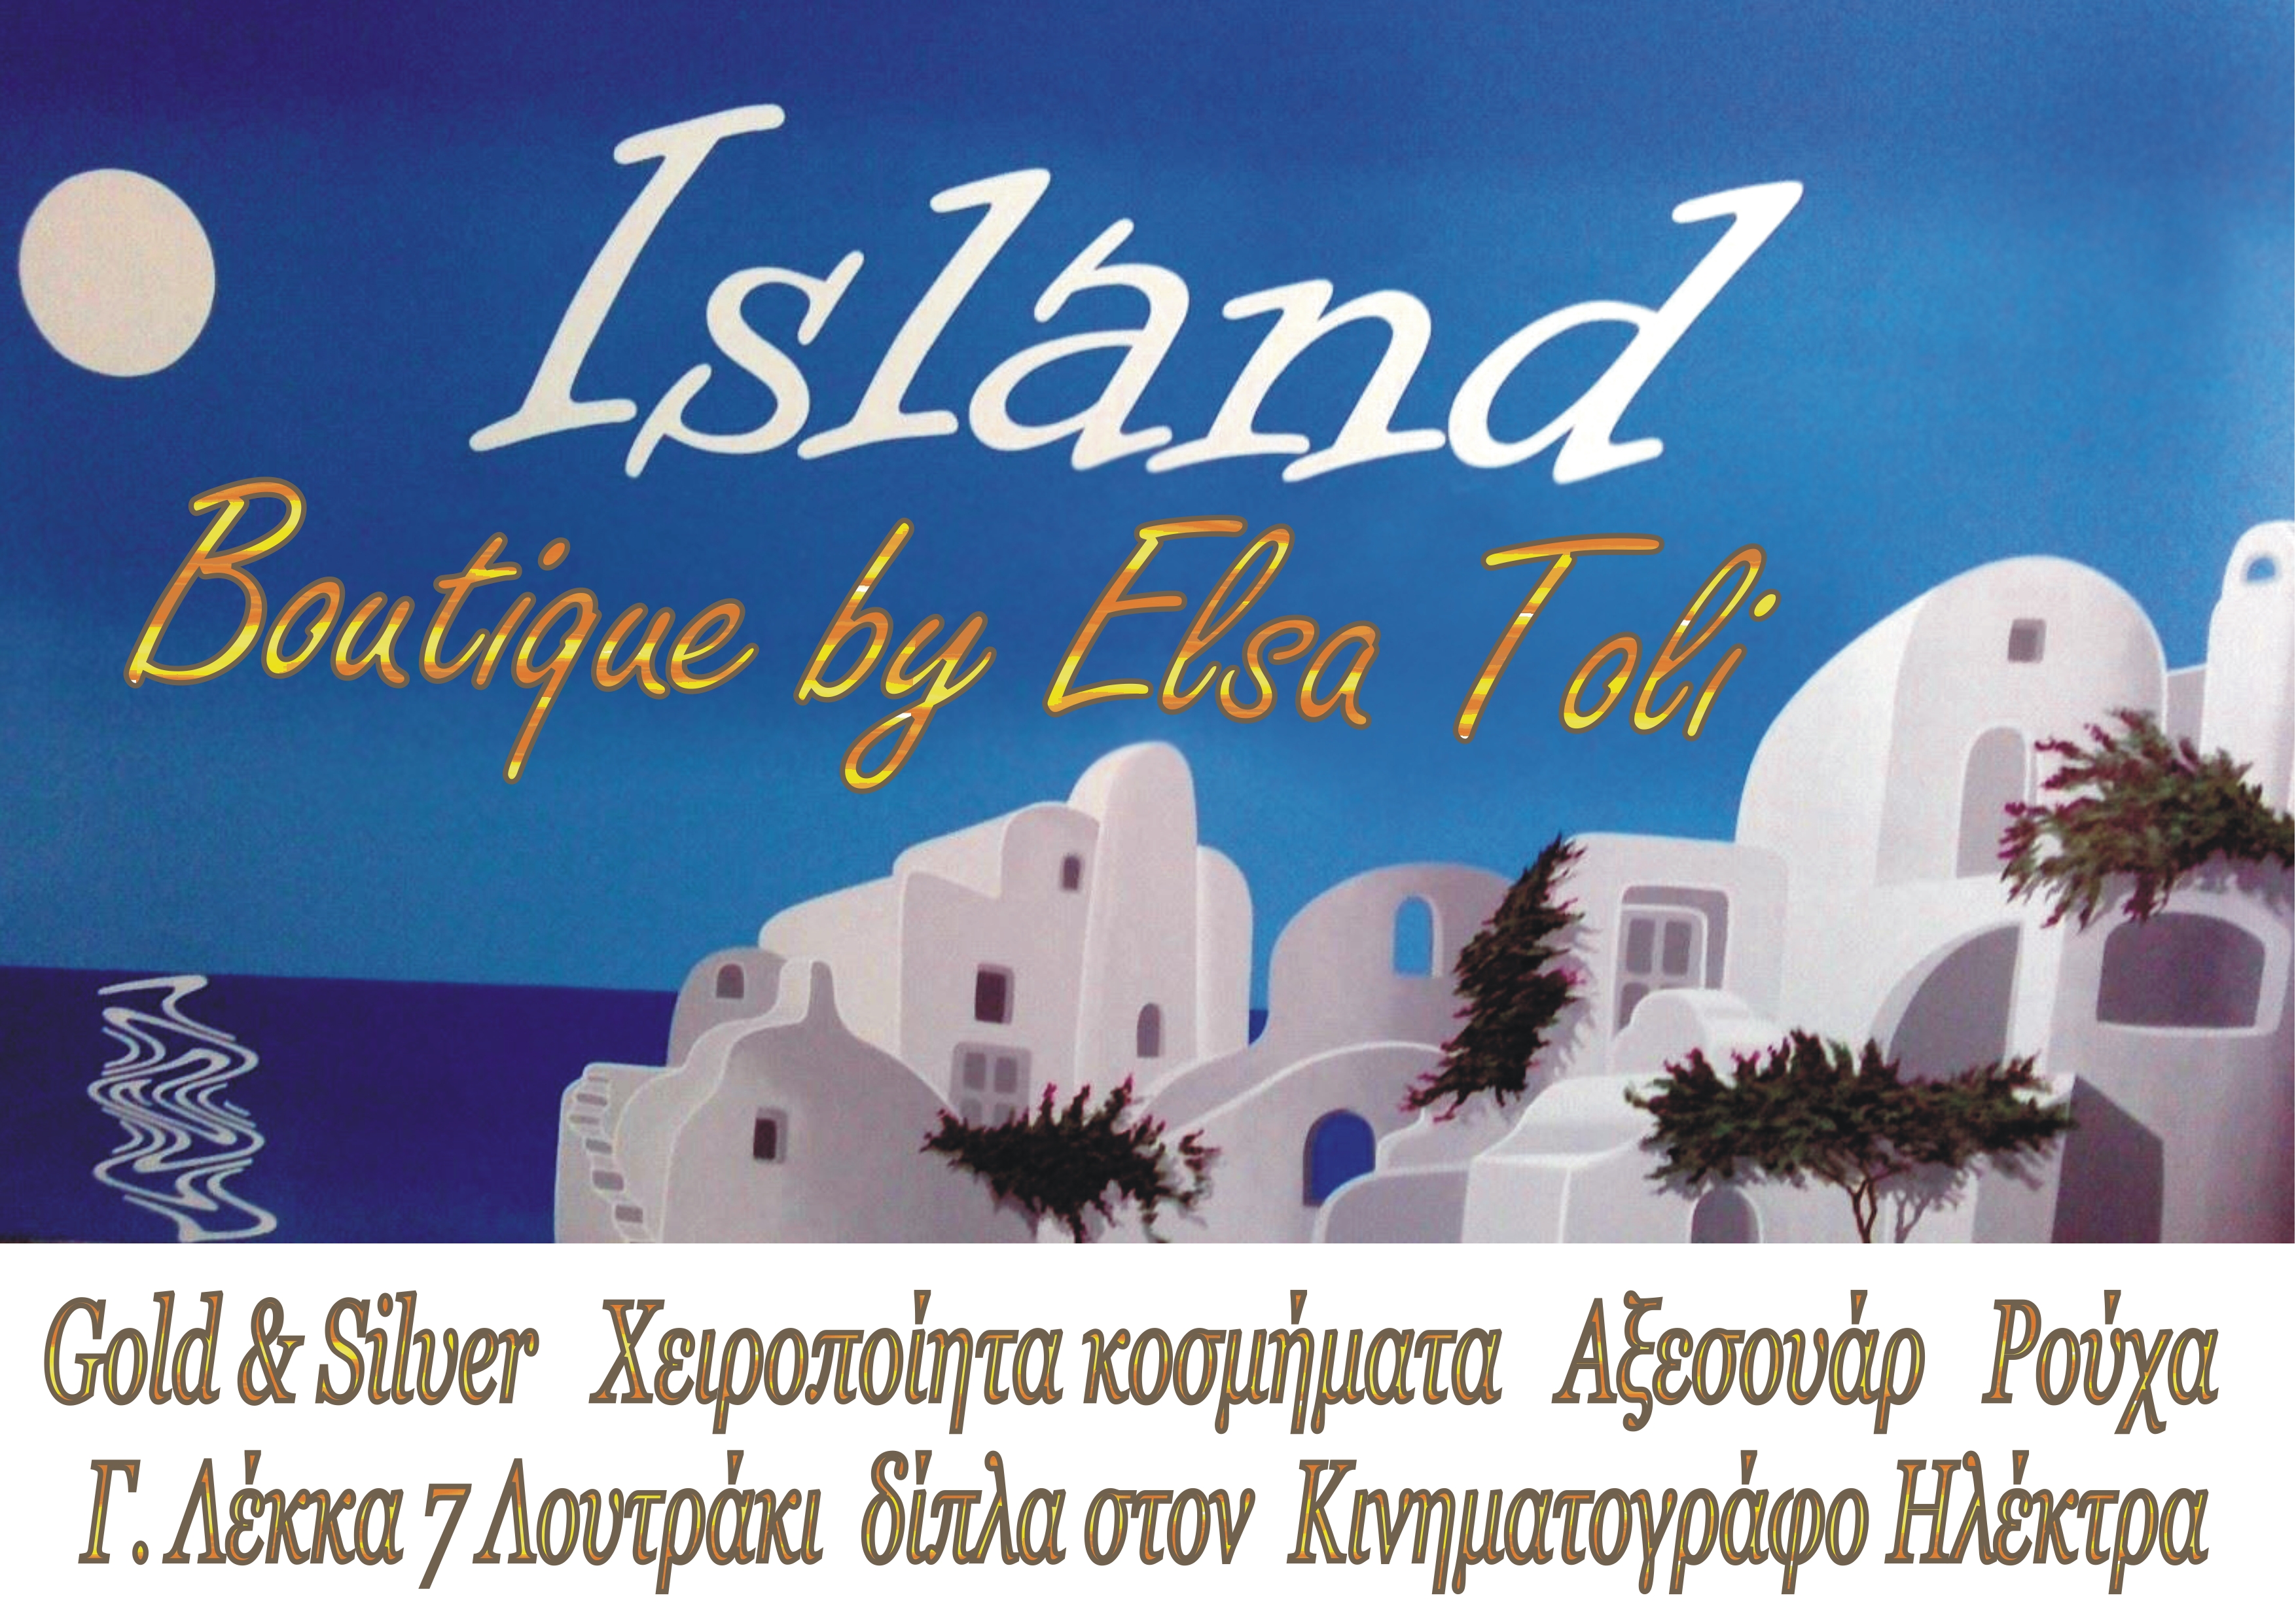 Island flyer Boutique